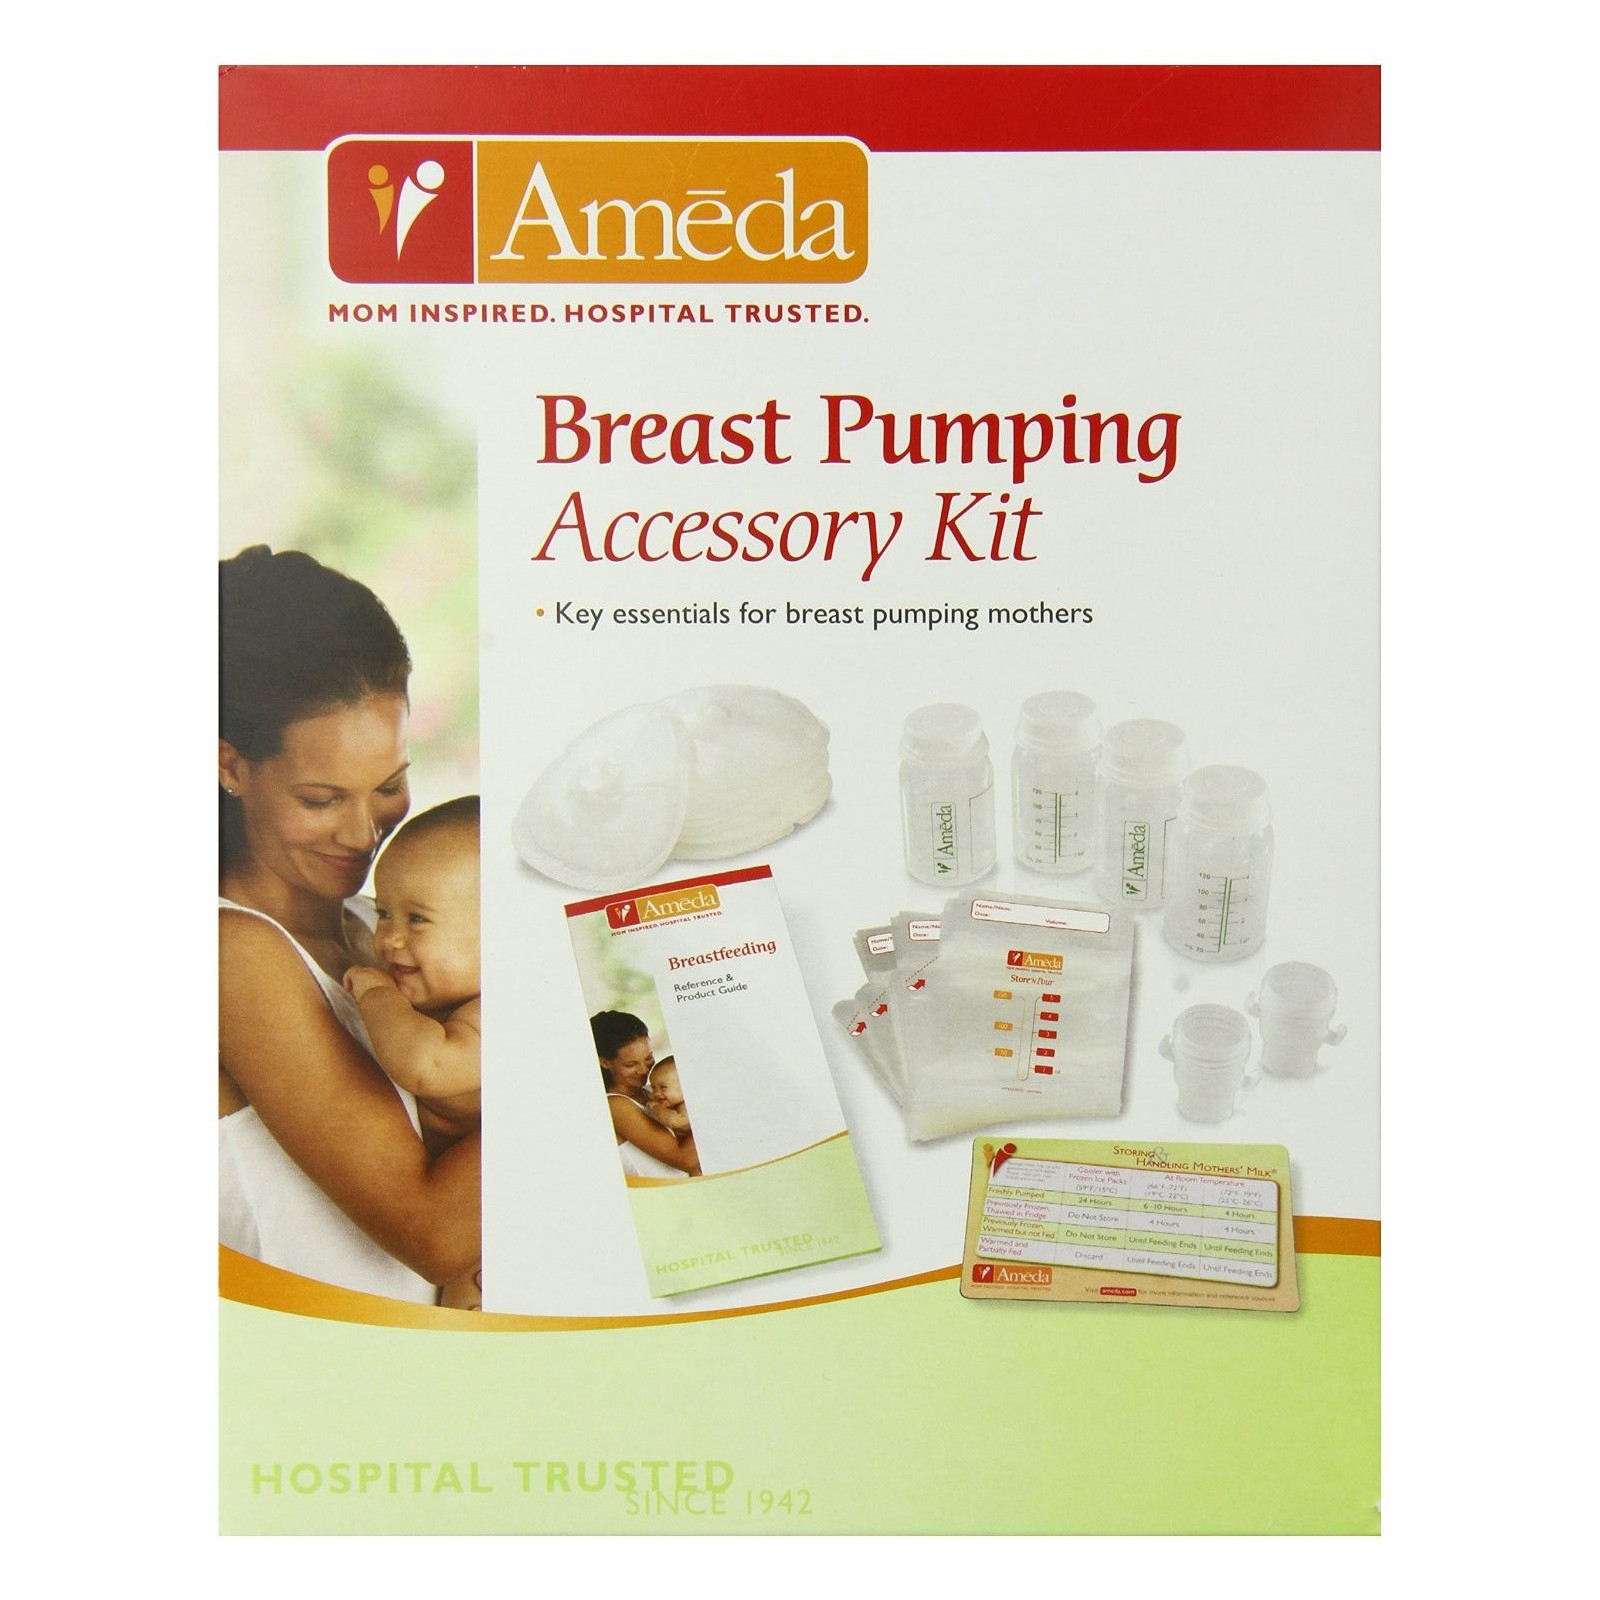 https://amedsupplies.com/847-original/ameda-breast-pumping-accessory-kit-.jpg